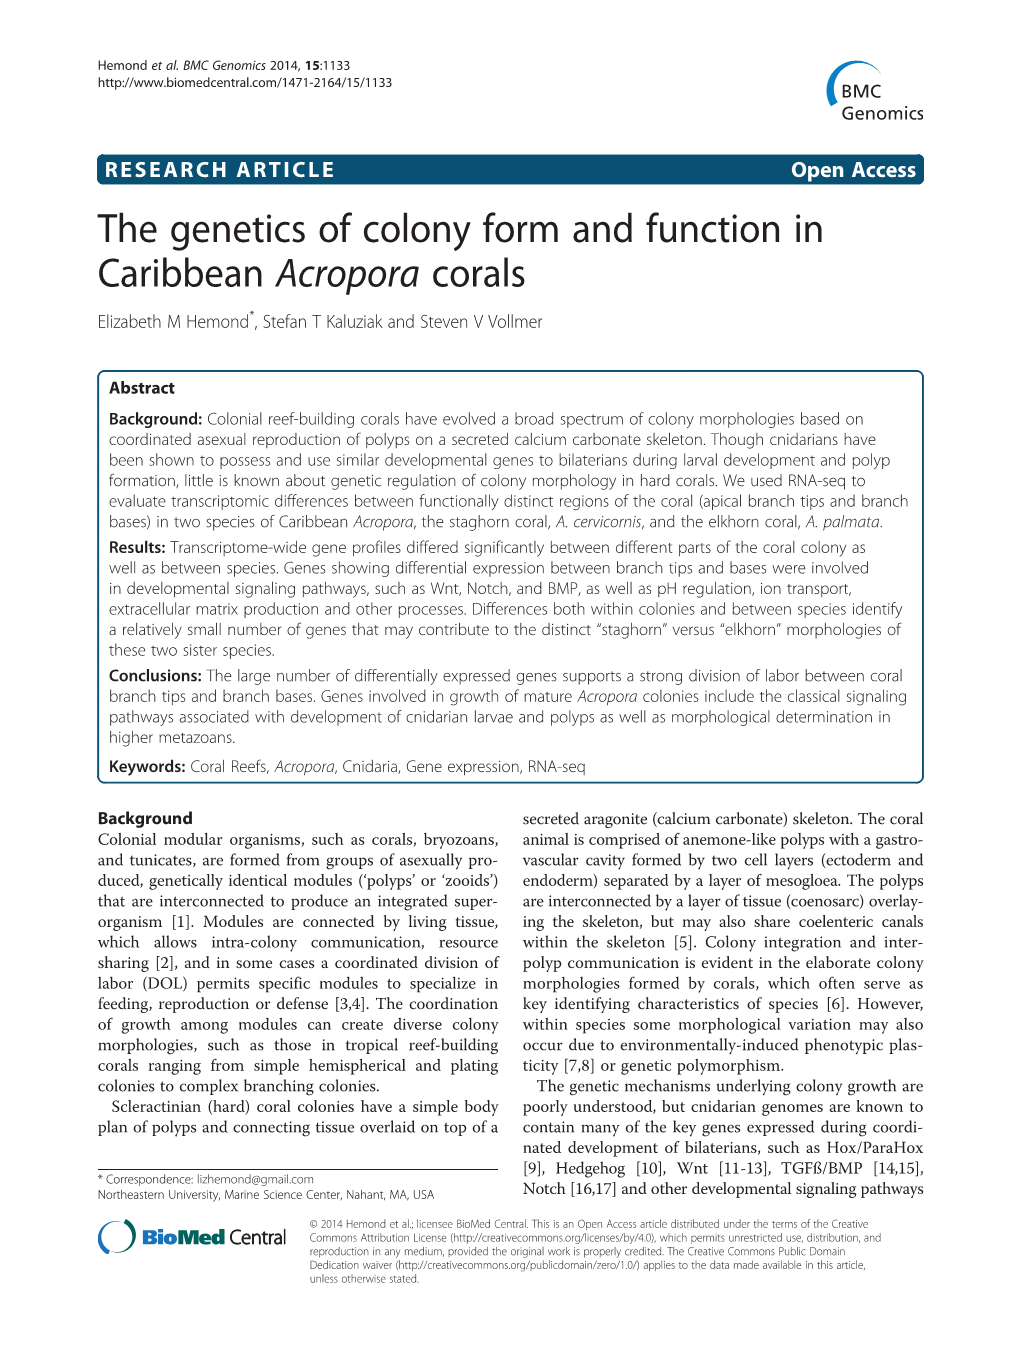 The Genetics of Colony Form and Function in Caribbean Acropora Corals Elizabeth M Hemond*, Stefan T Kaluziak and Steven V Vollmer